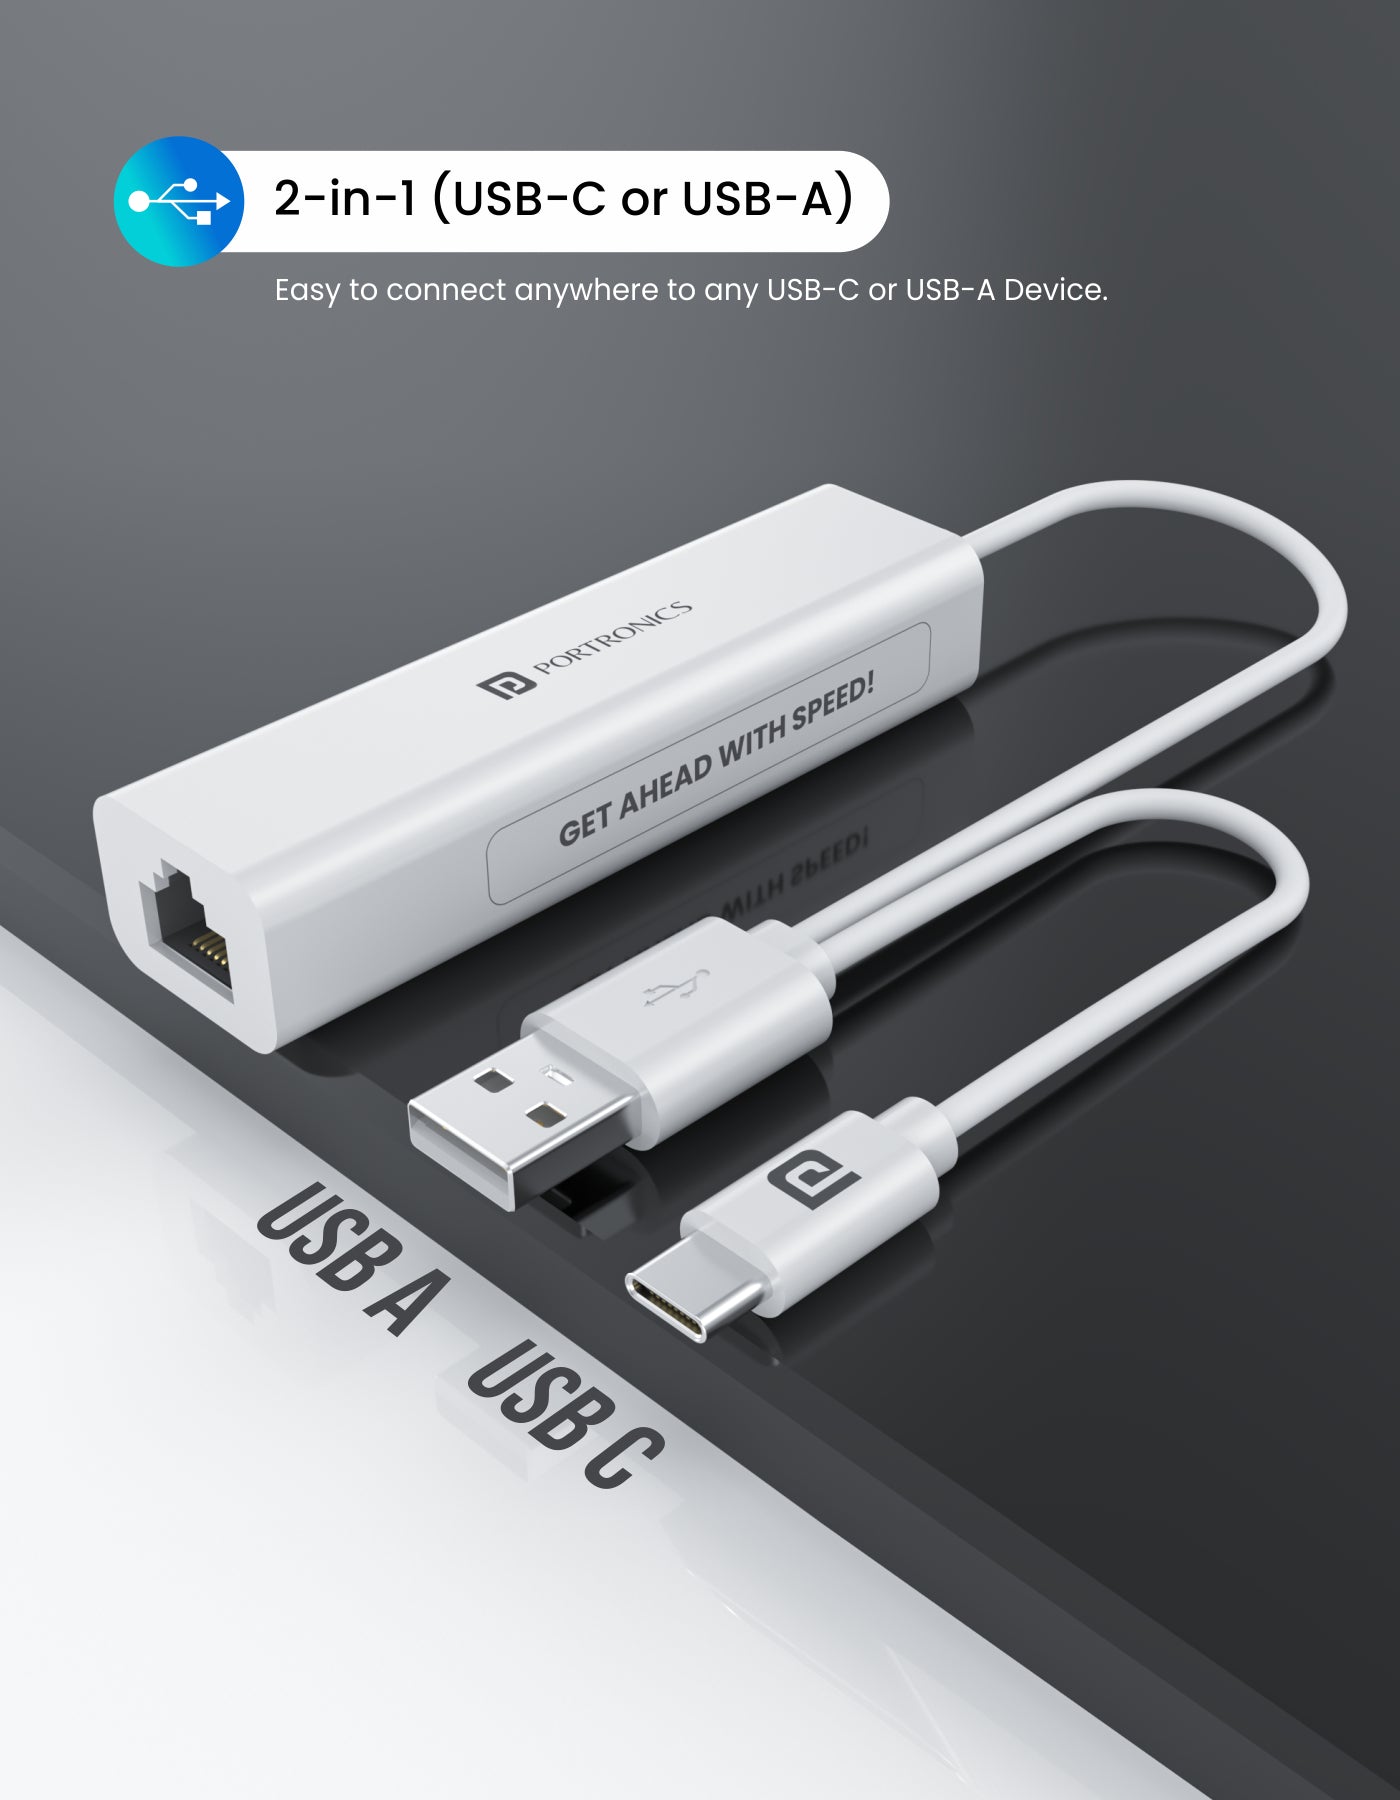 Portronics Mport 60-Multifunciton USB Hub for laptop